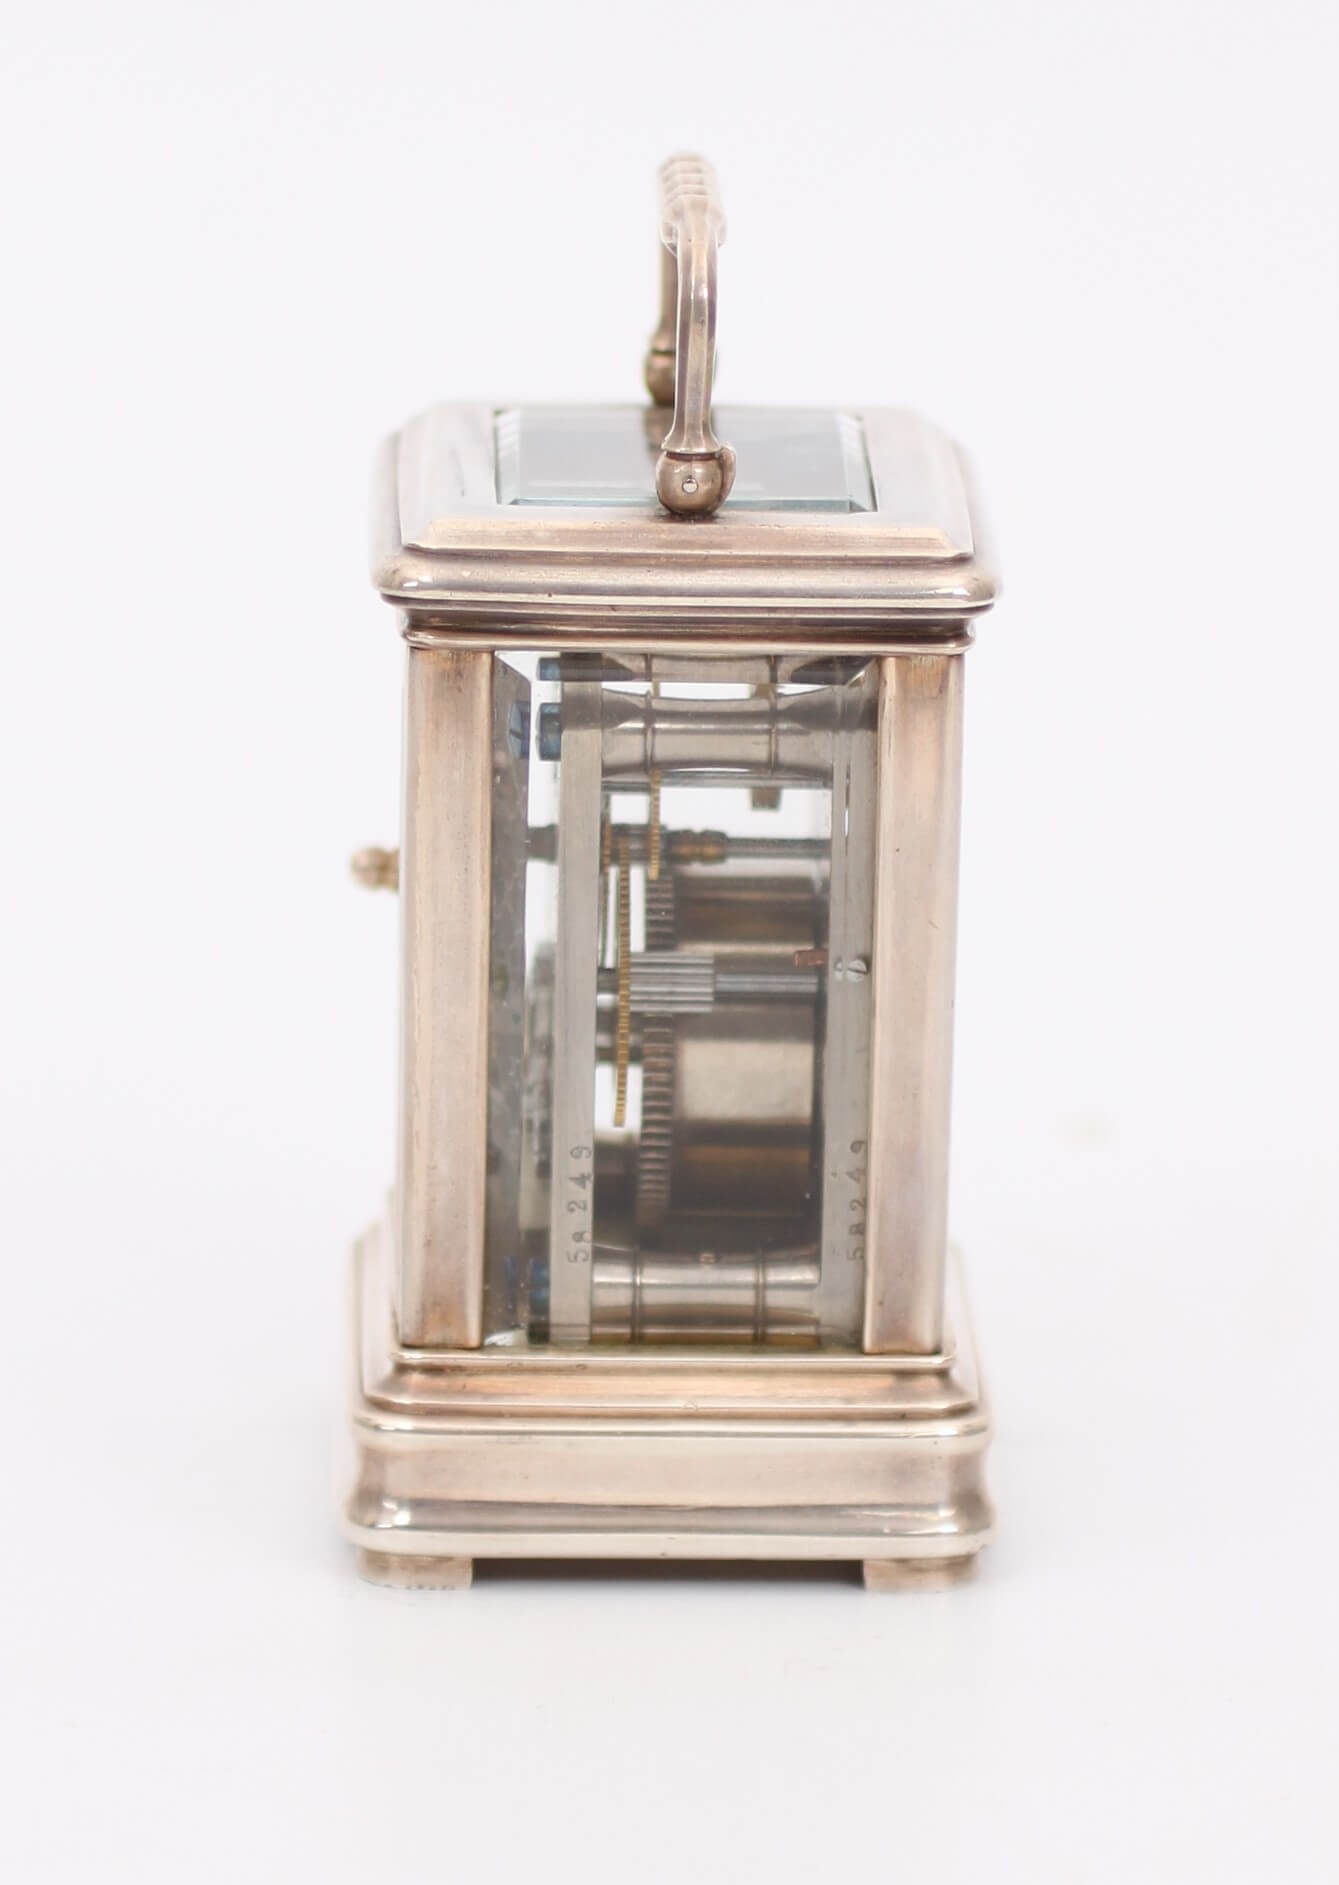 Swiss silver miniature carriage clock Gübelin 1890